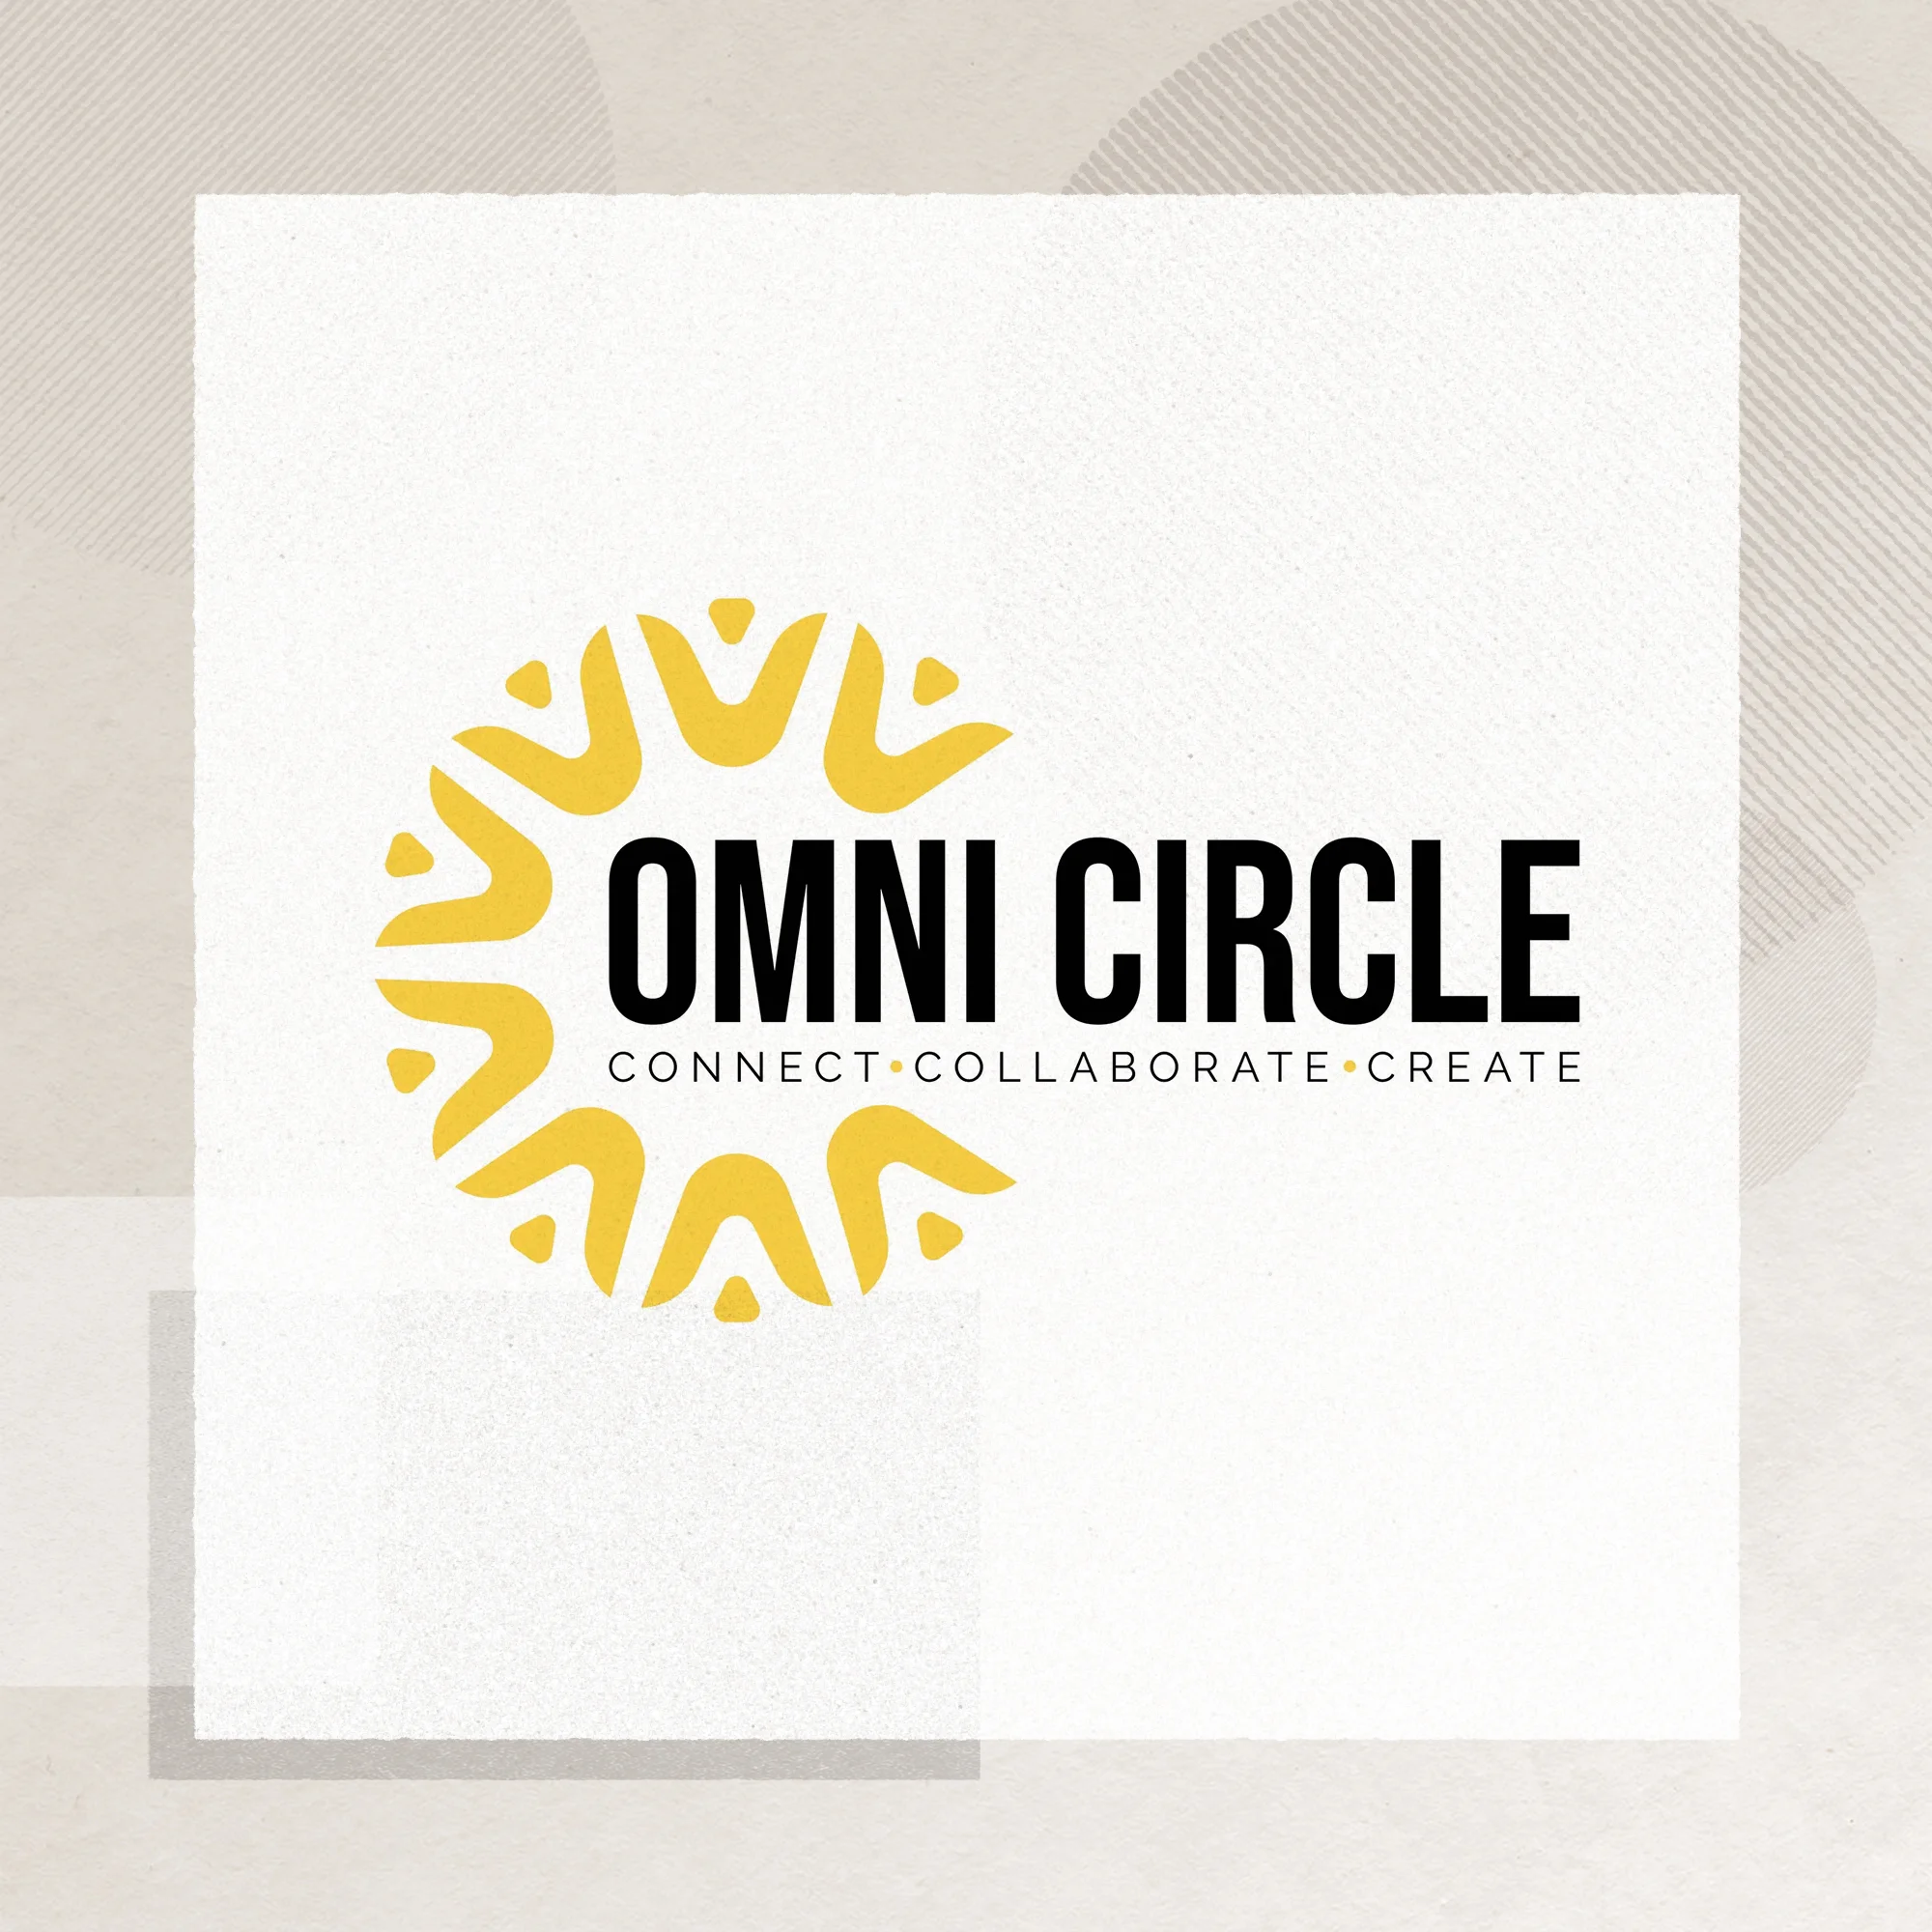 Omni Circle Group